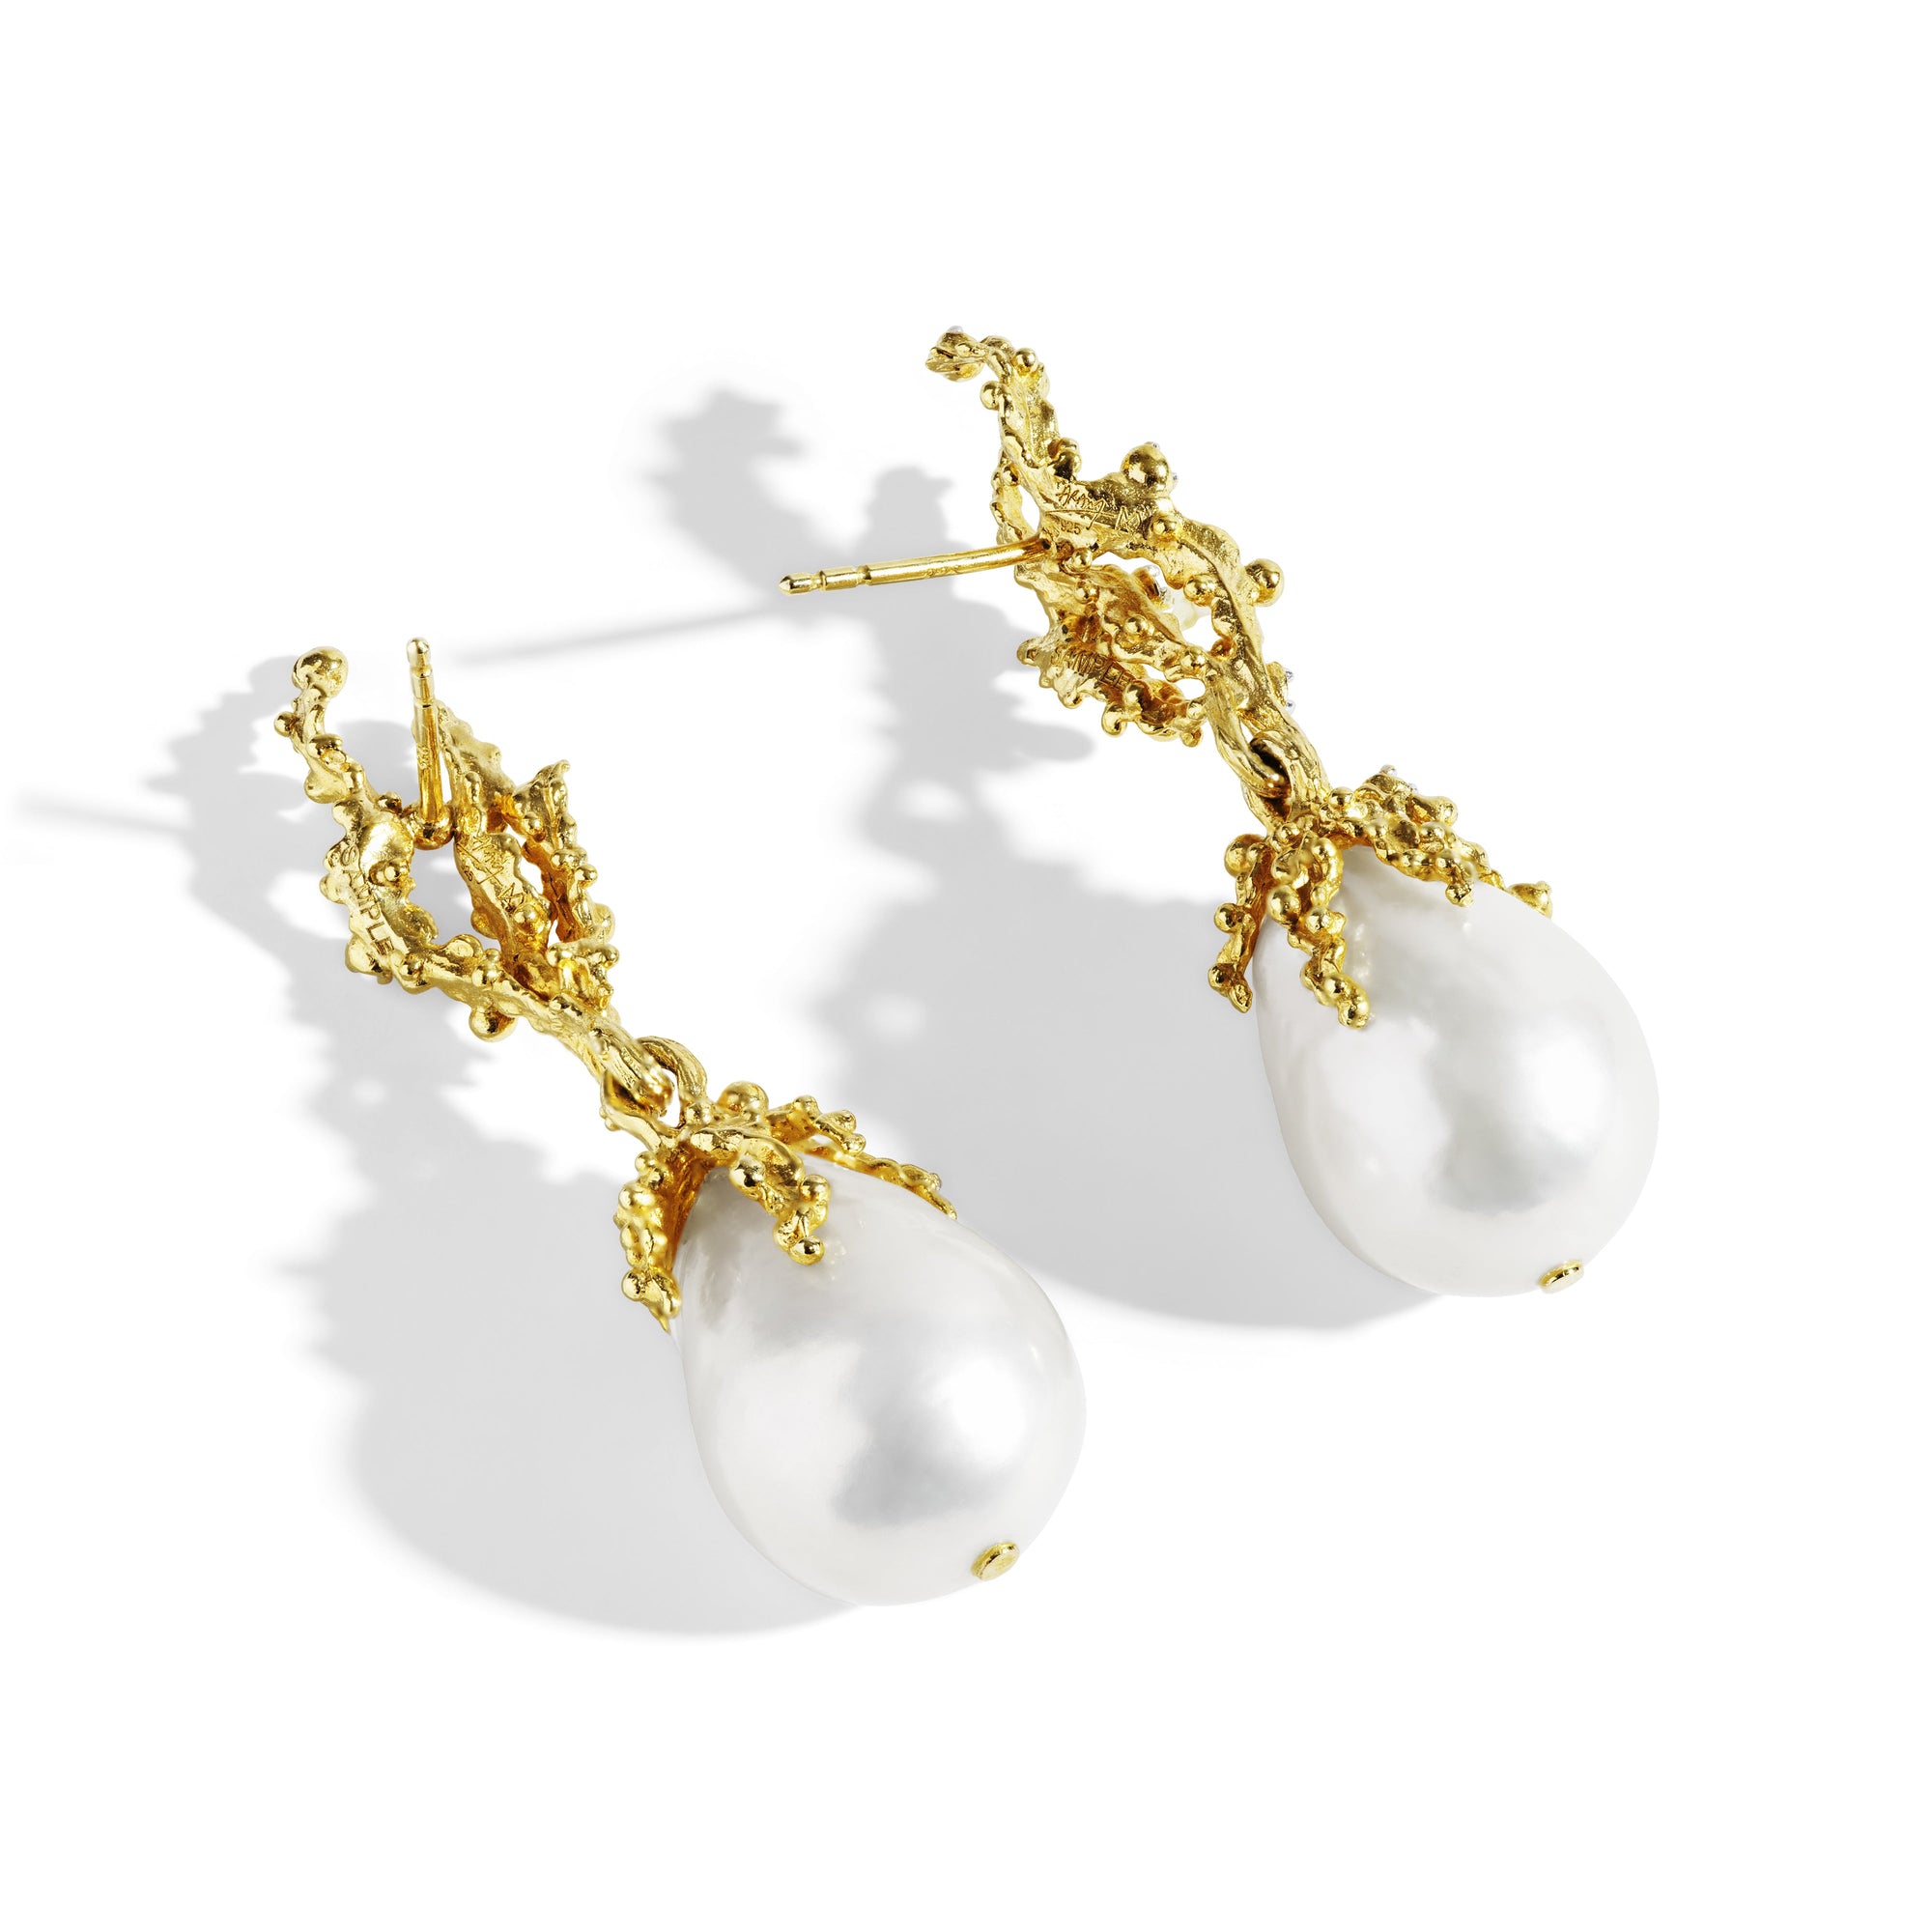 Michael Aram Ocean Earrings with Pearls and Diamonds